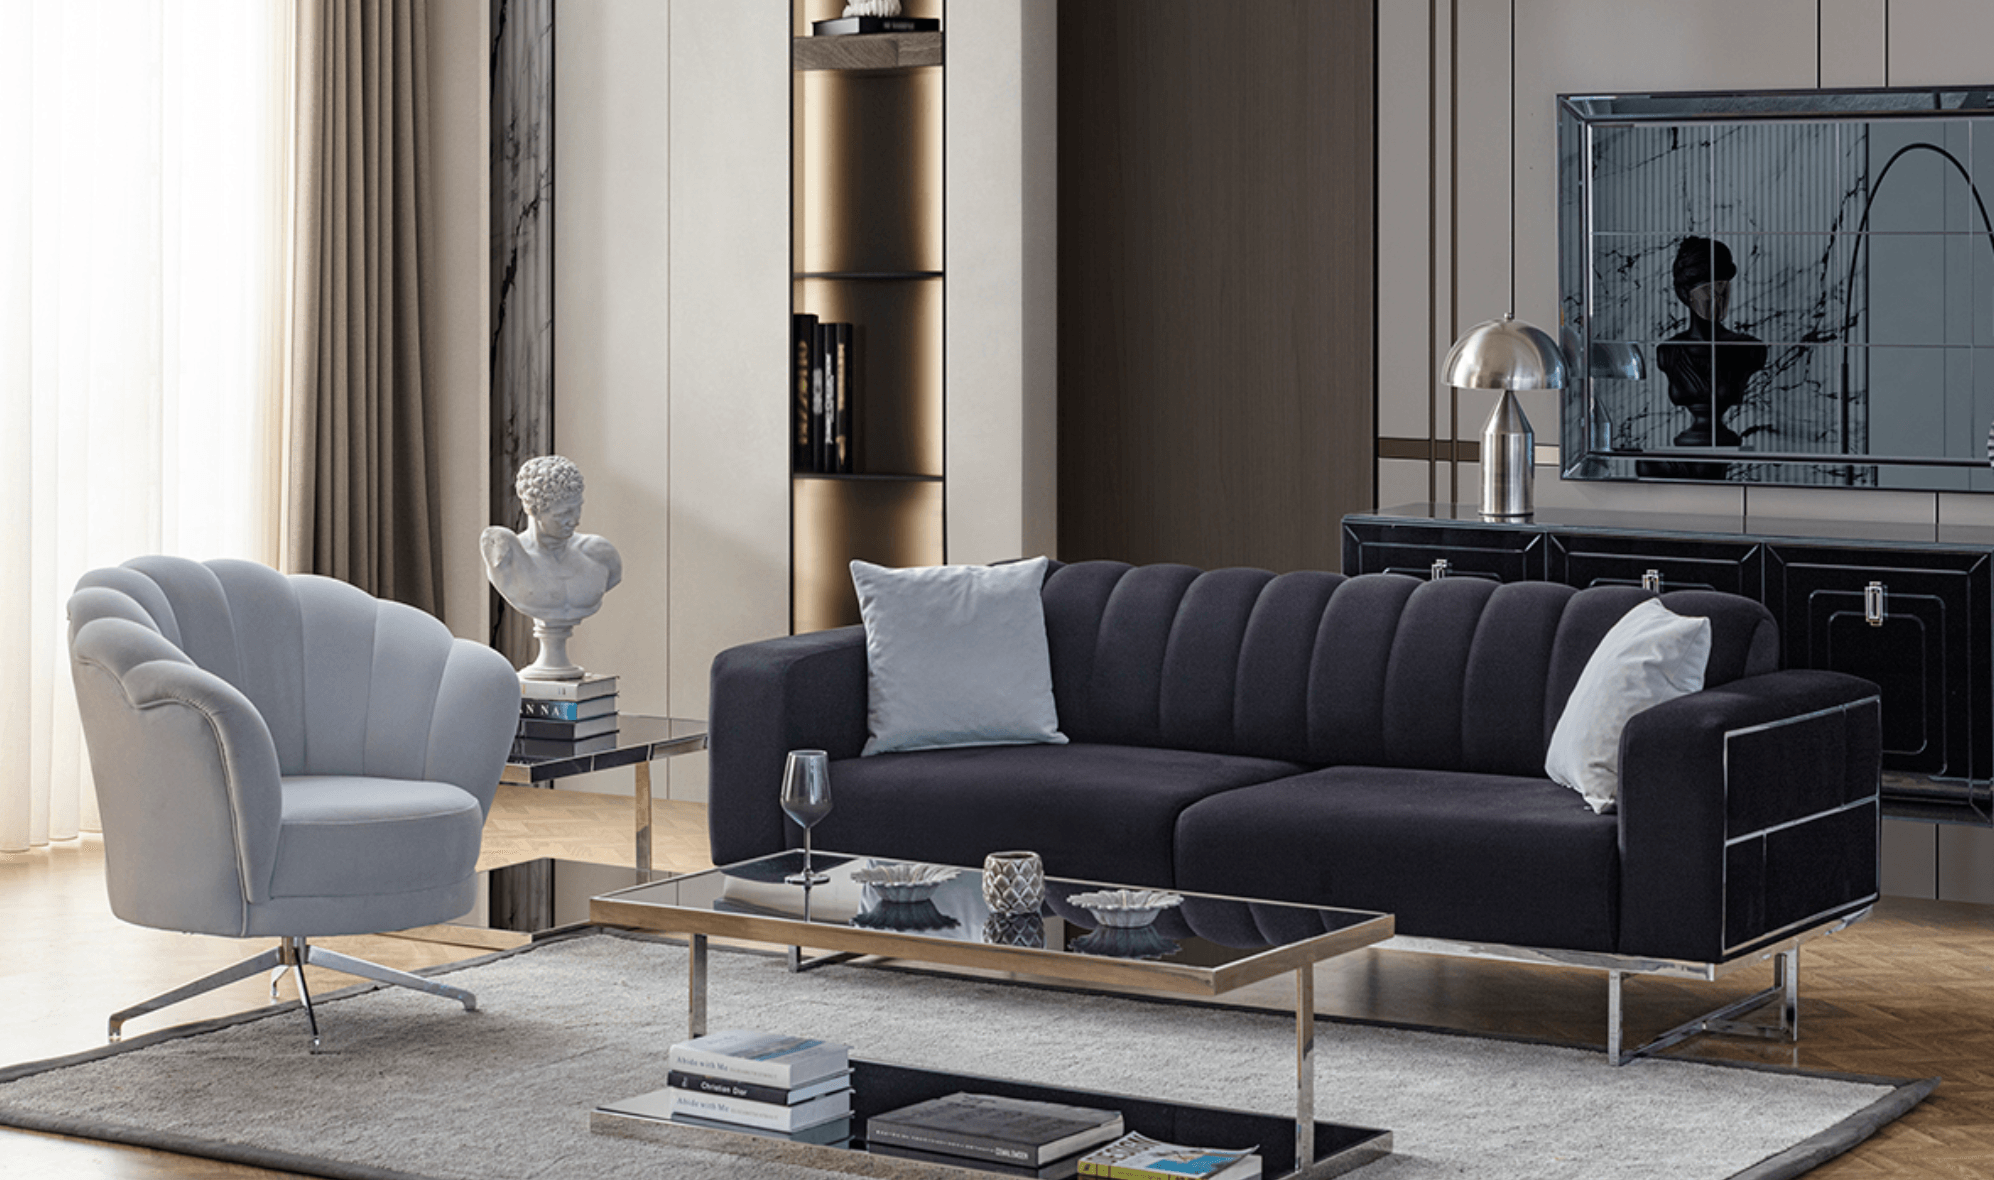 Milos Chair - Home Store Furniture